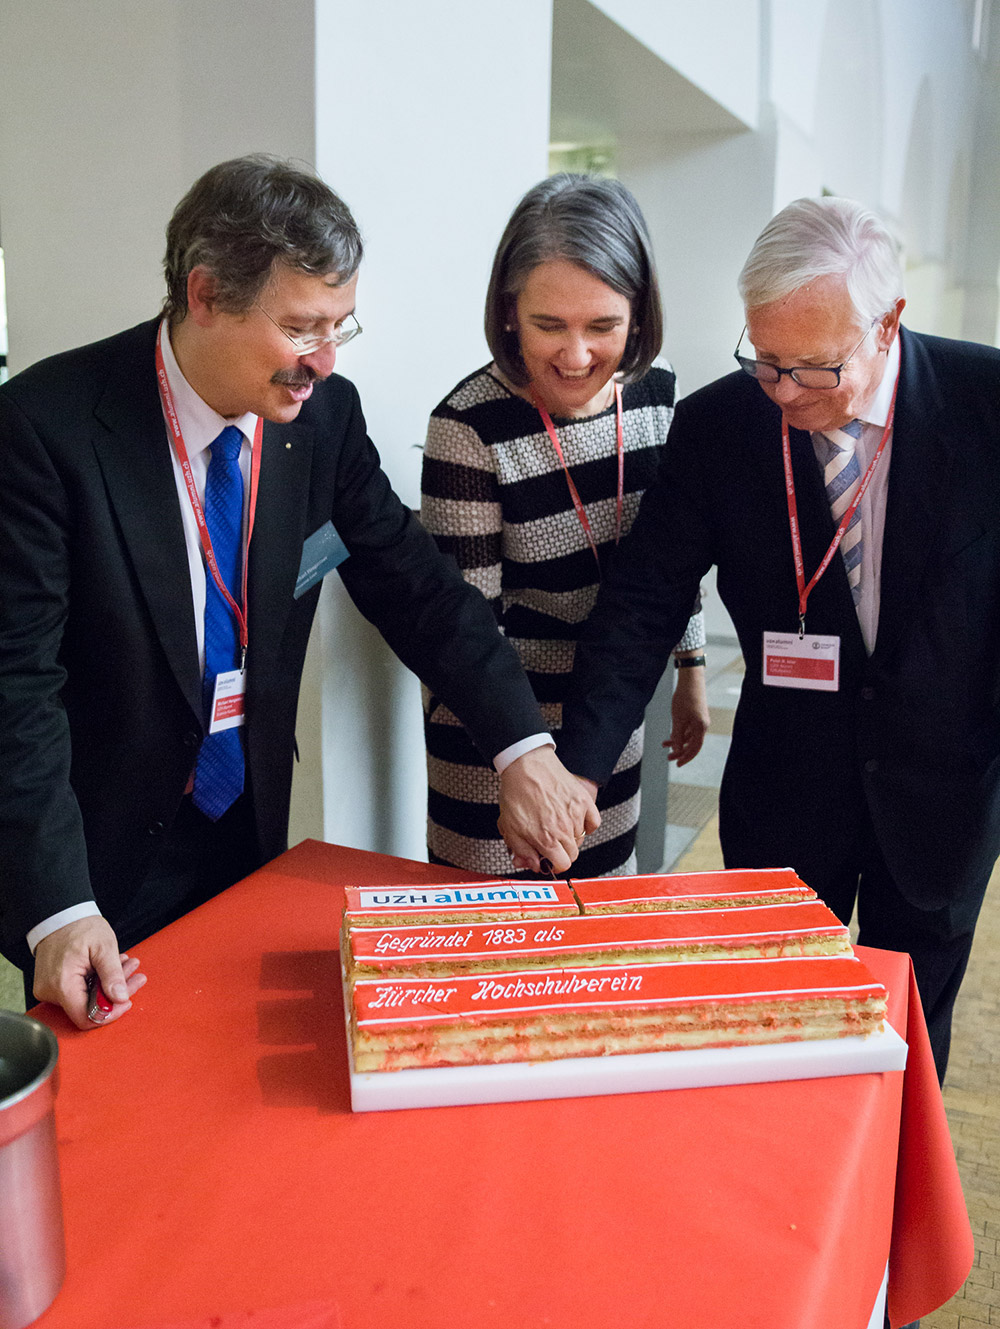 Rektor Michael Hengartner, Co-Präsidentin Denise Schmid und Co-Präsident Peter Isler schneiden die Geburtstagscremeschnitte an.